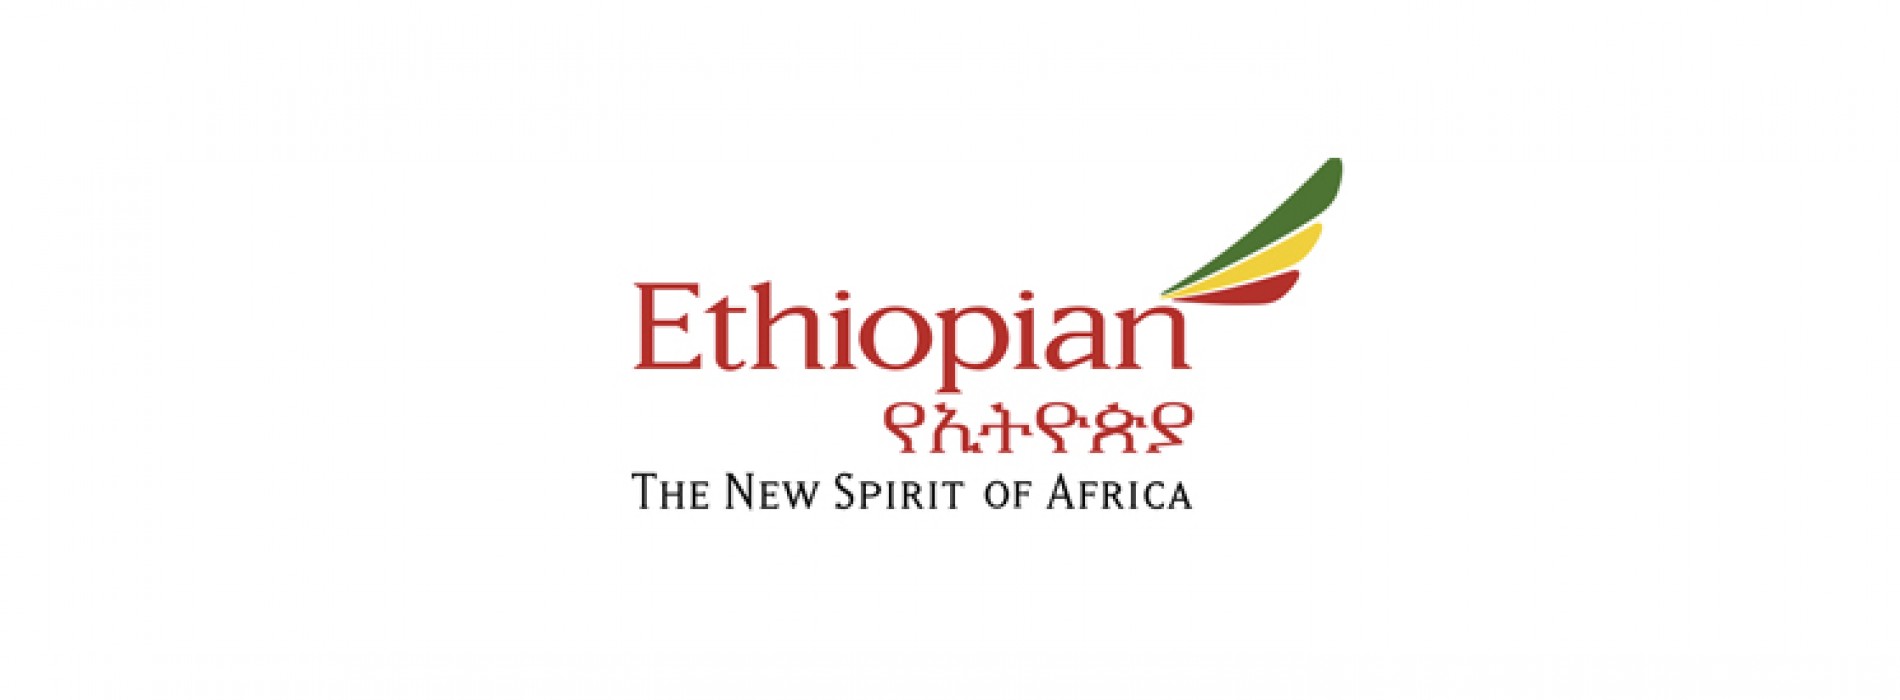 Ethiopian to start flights to Istanbul